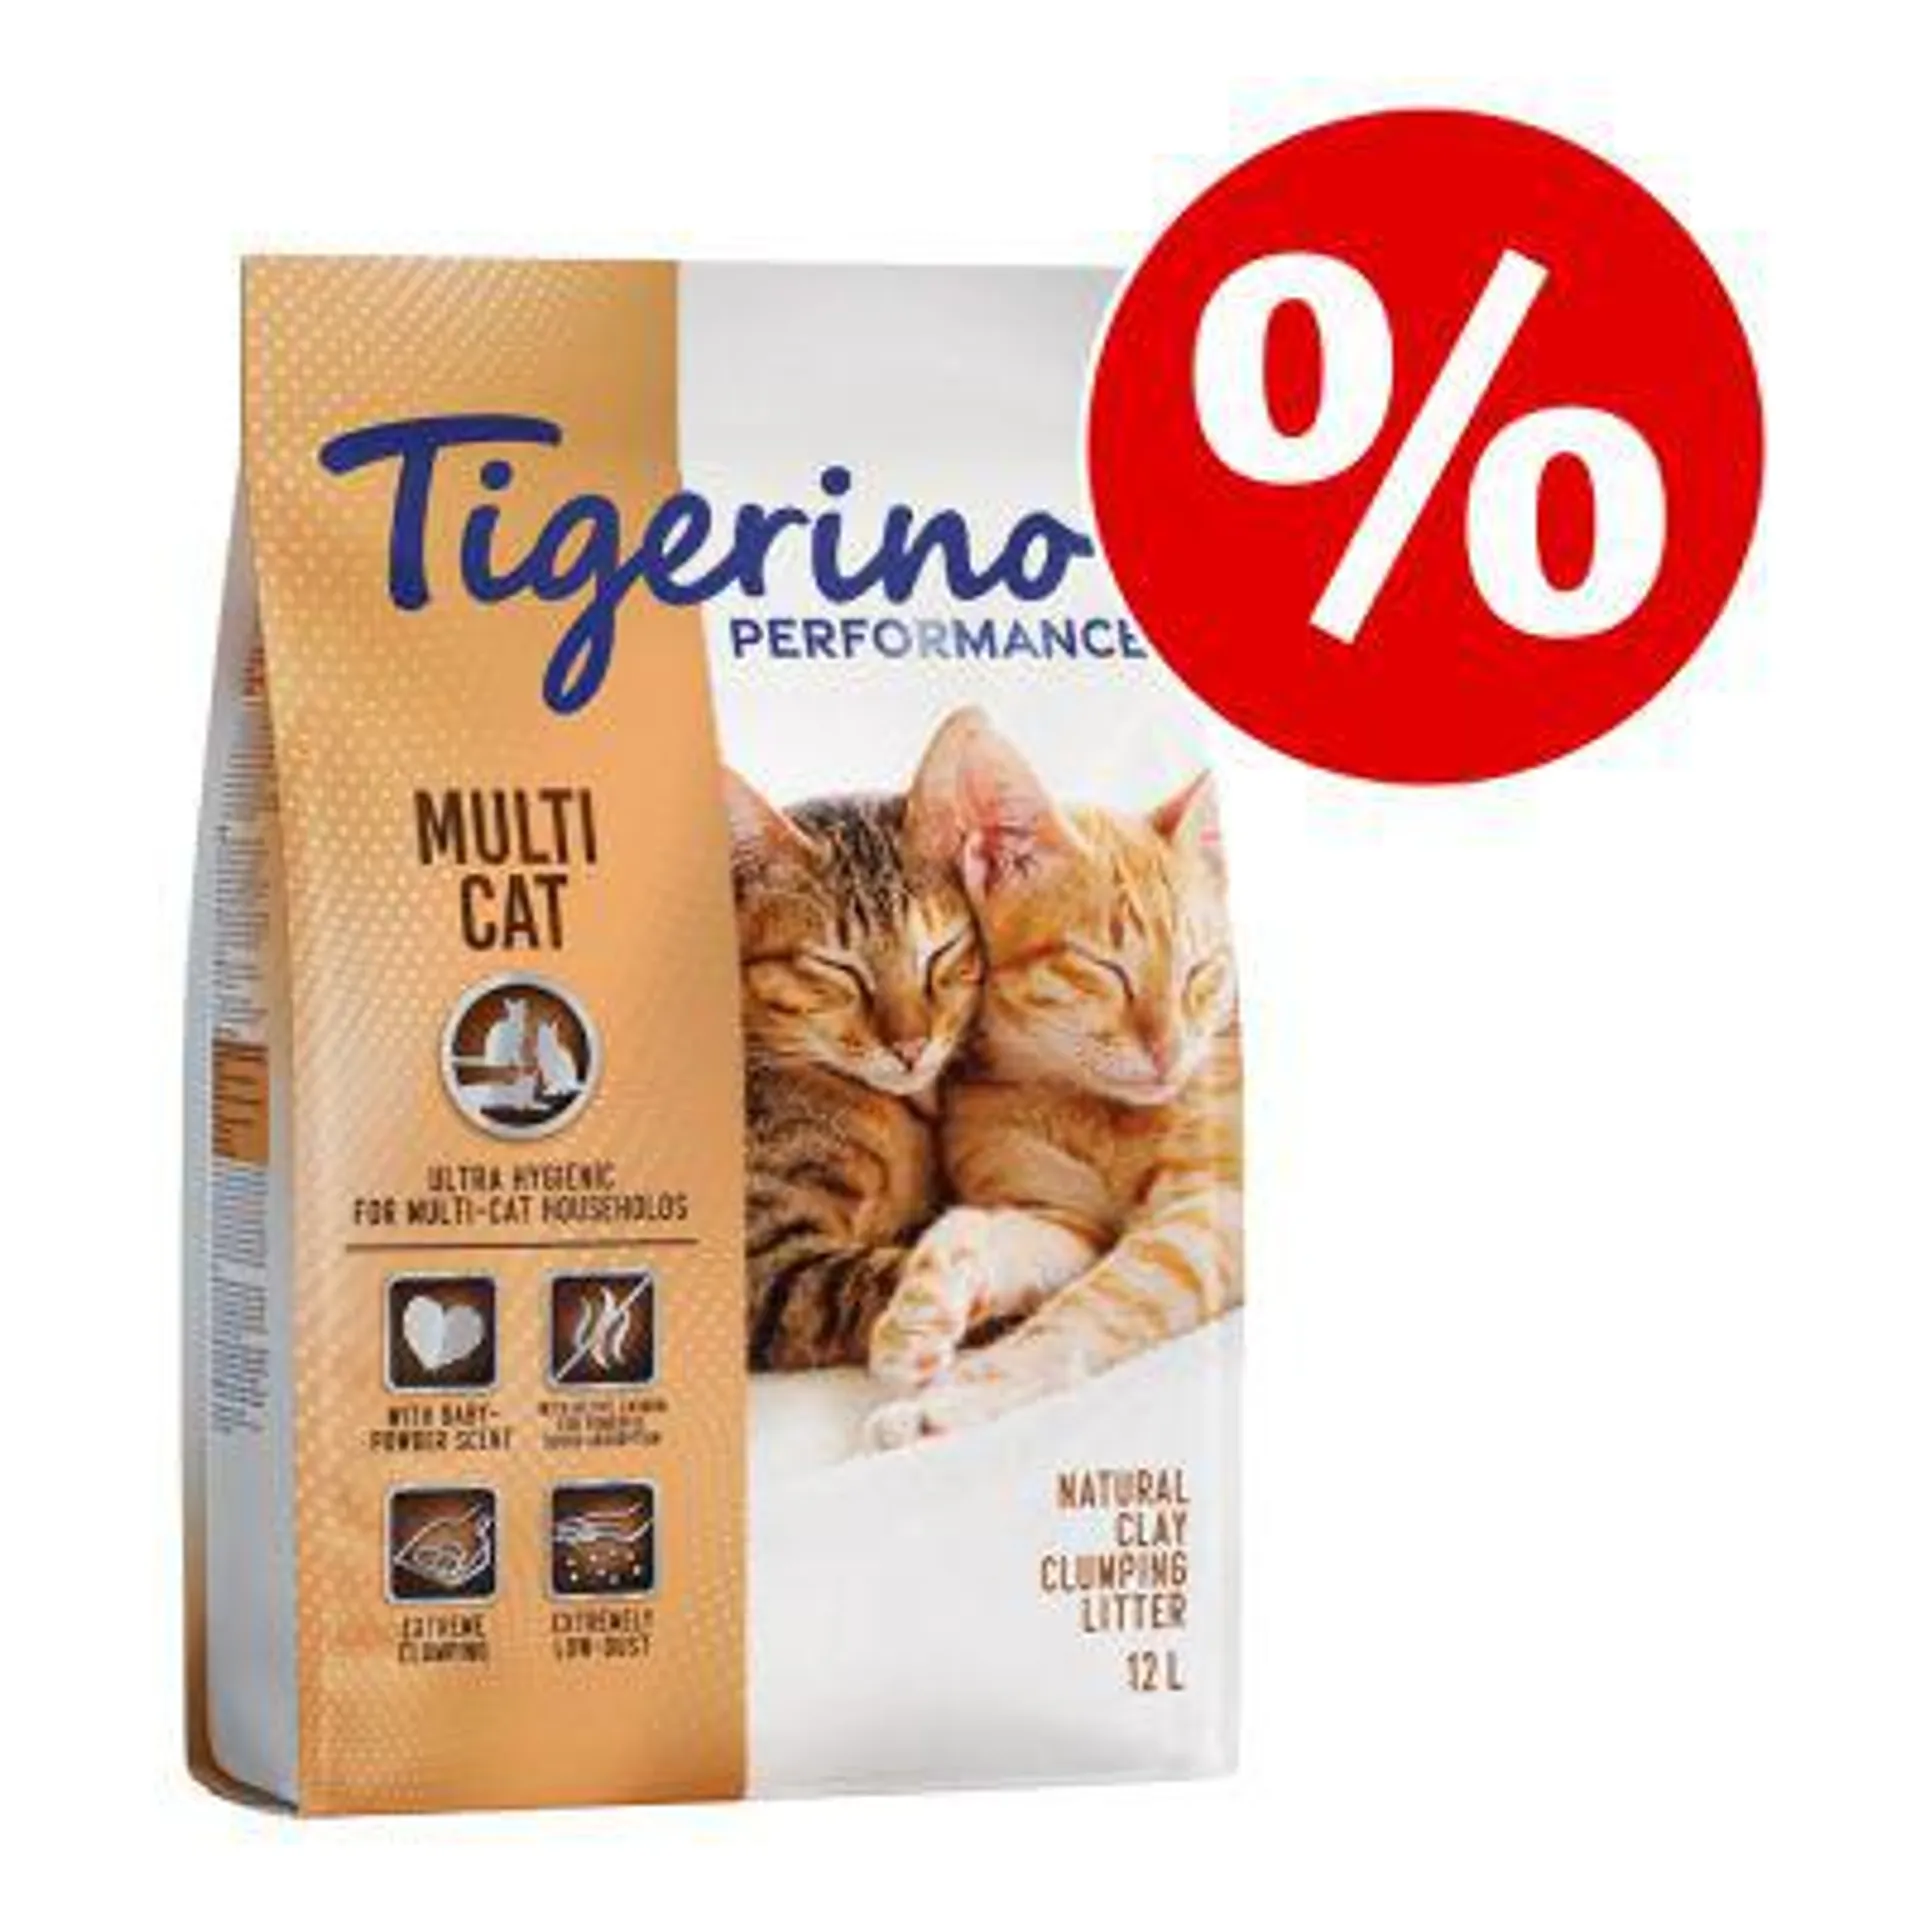 Tigerino Performance Cat Litter - Special Price!*